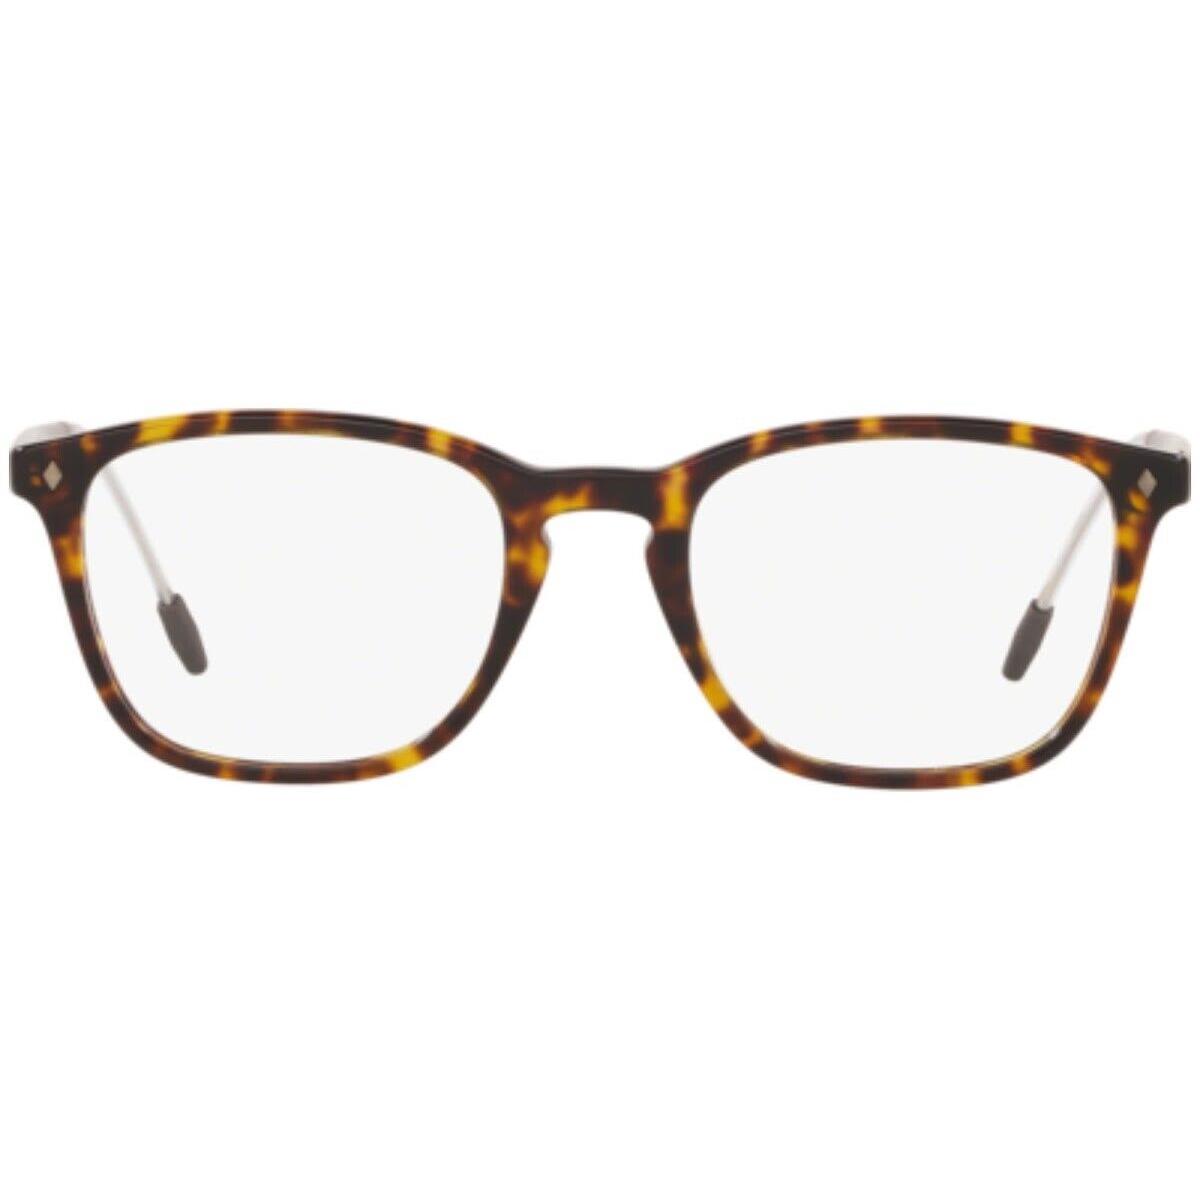 Giorgio Armani AR7171 5026 Tortoise Slim Plastic Eyeglasses Frame 51-20-145 7171